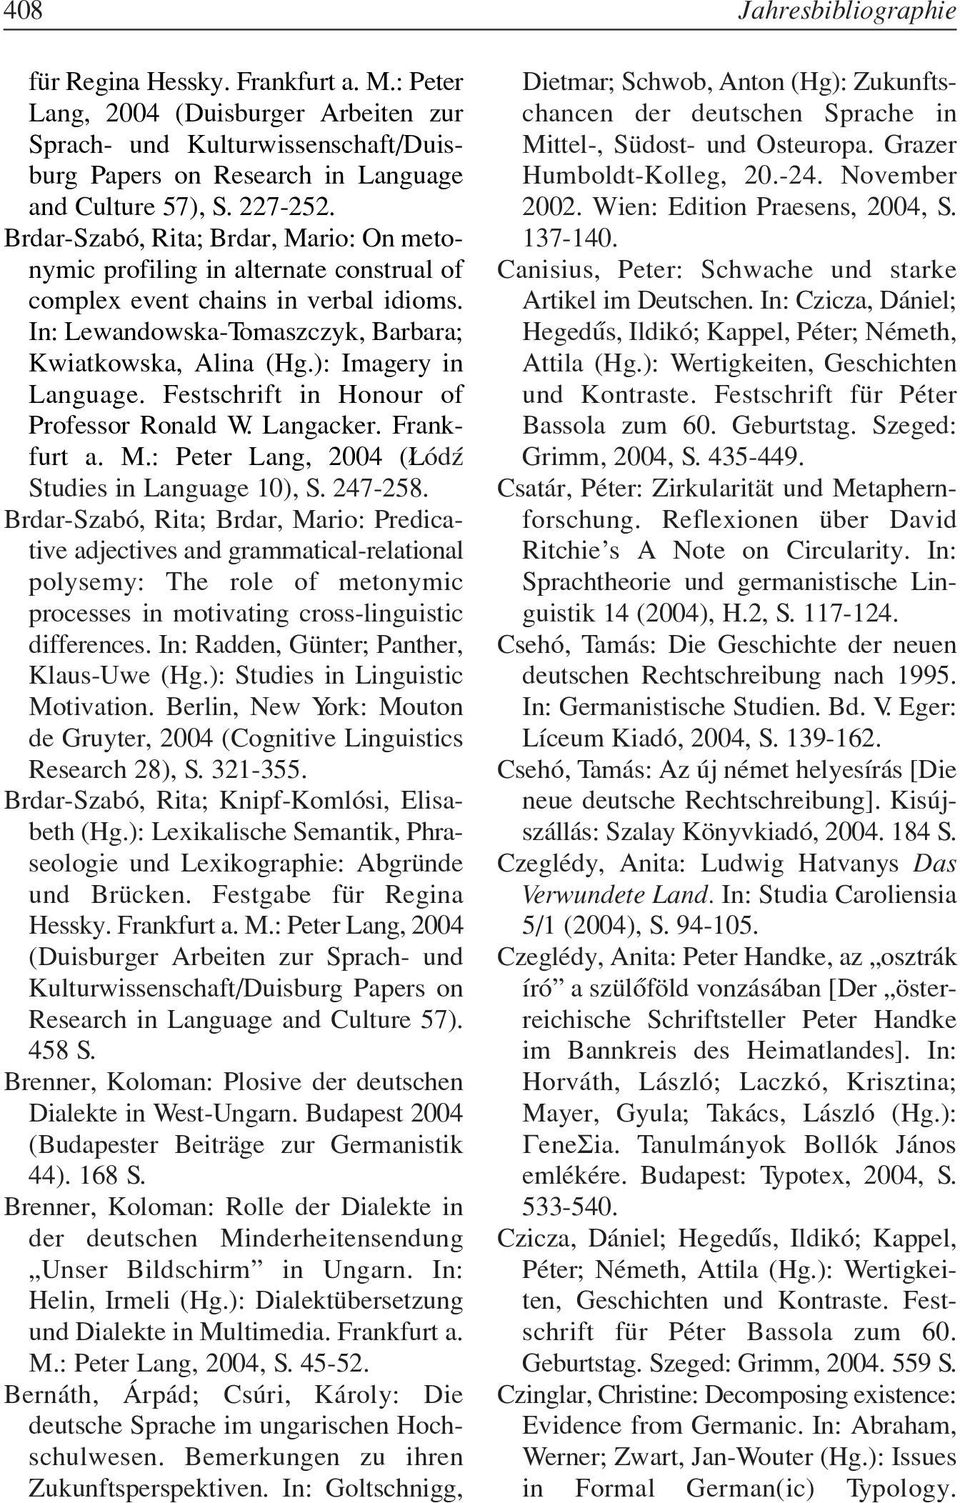 ): Imagery in Language. Festschrift in Honour of Professor Ronald W. Langacker. Frankfurt a. M.: Peter Lang, 2004 (L ódź Studies in Language 10), S. 247-258.